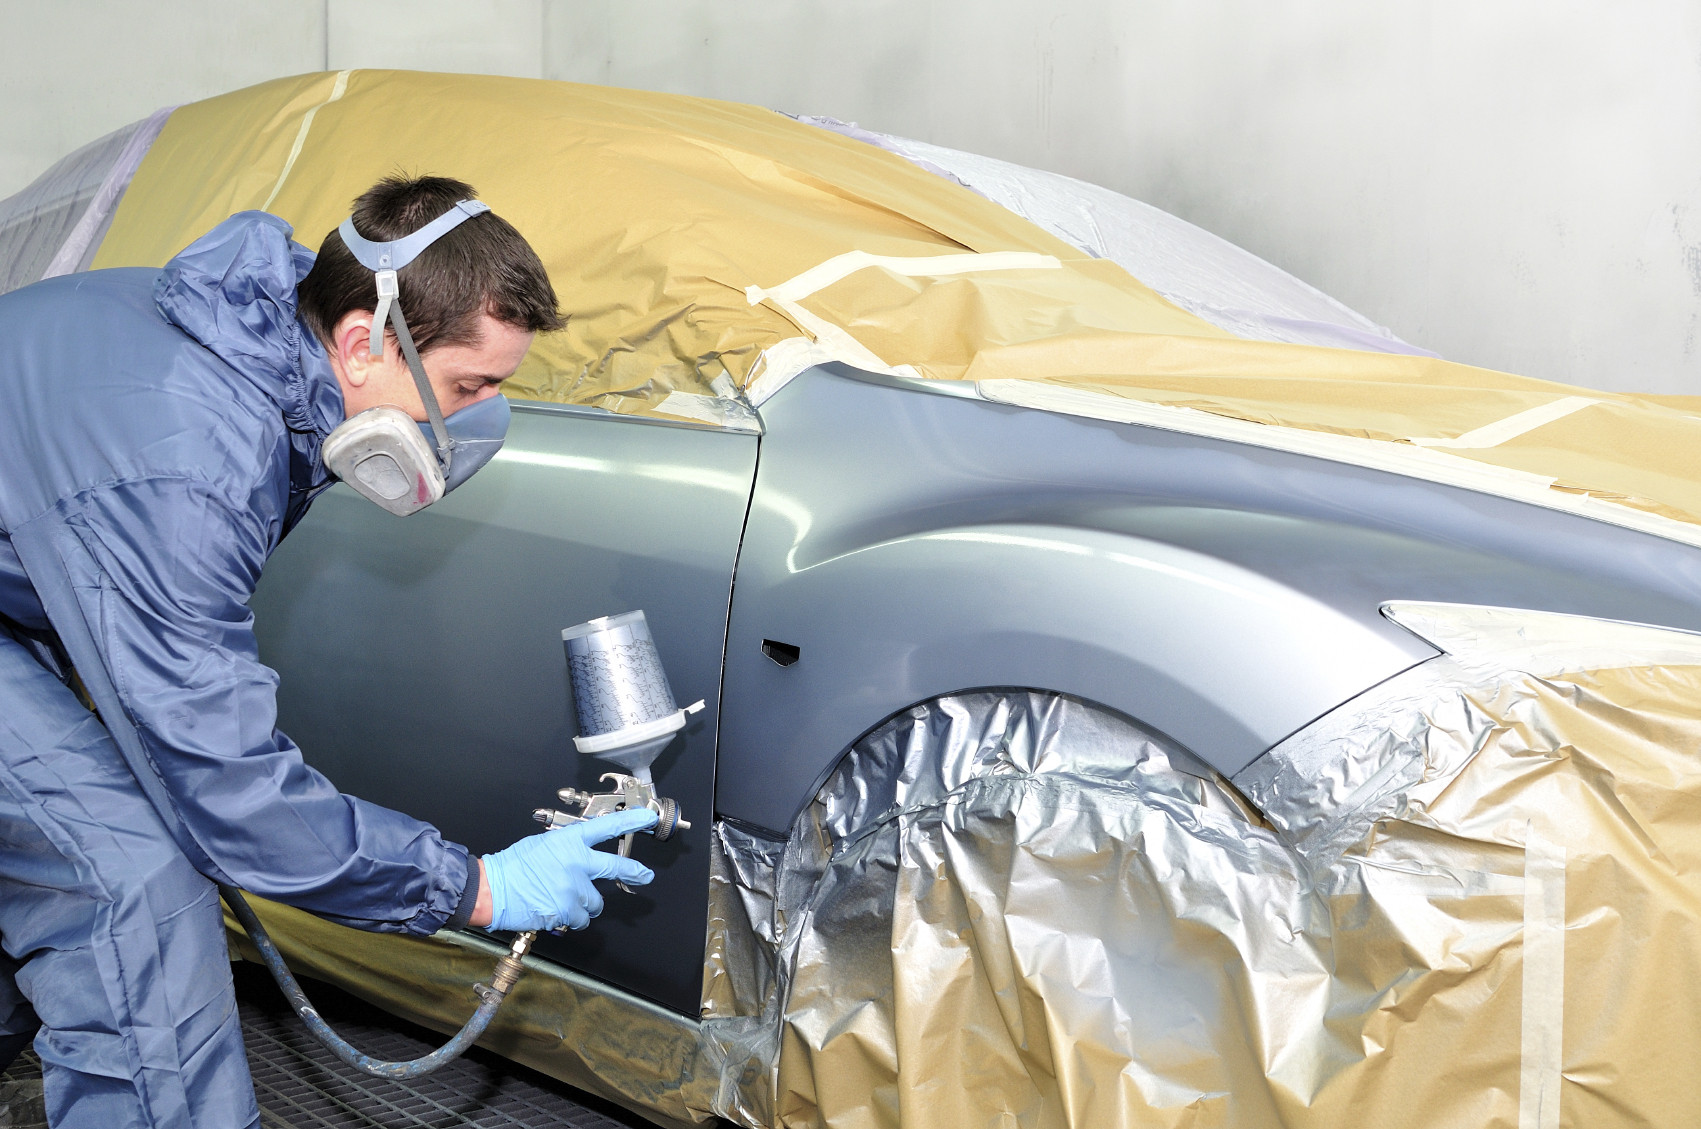 Best ideas about DIY Car Paint
. Save or Pin Car Paint Job Tempe Arizona – DIY Auto Paint Tips Now.